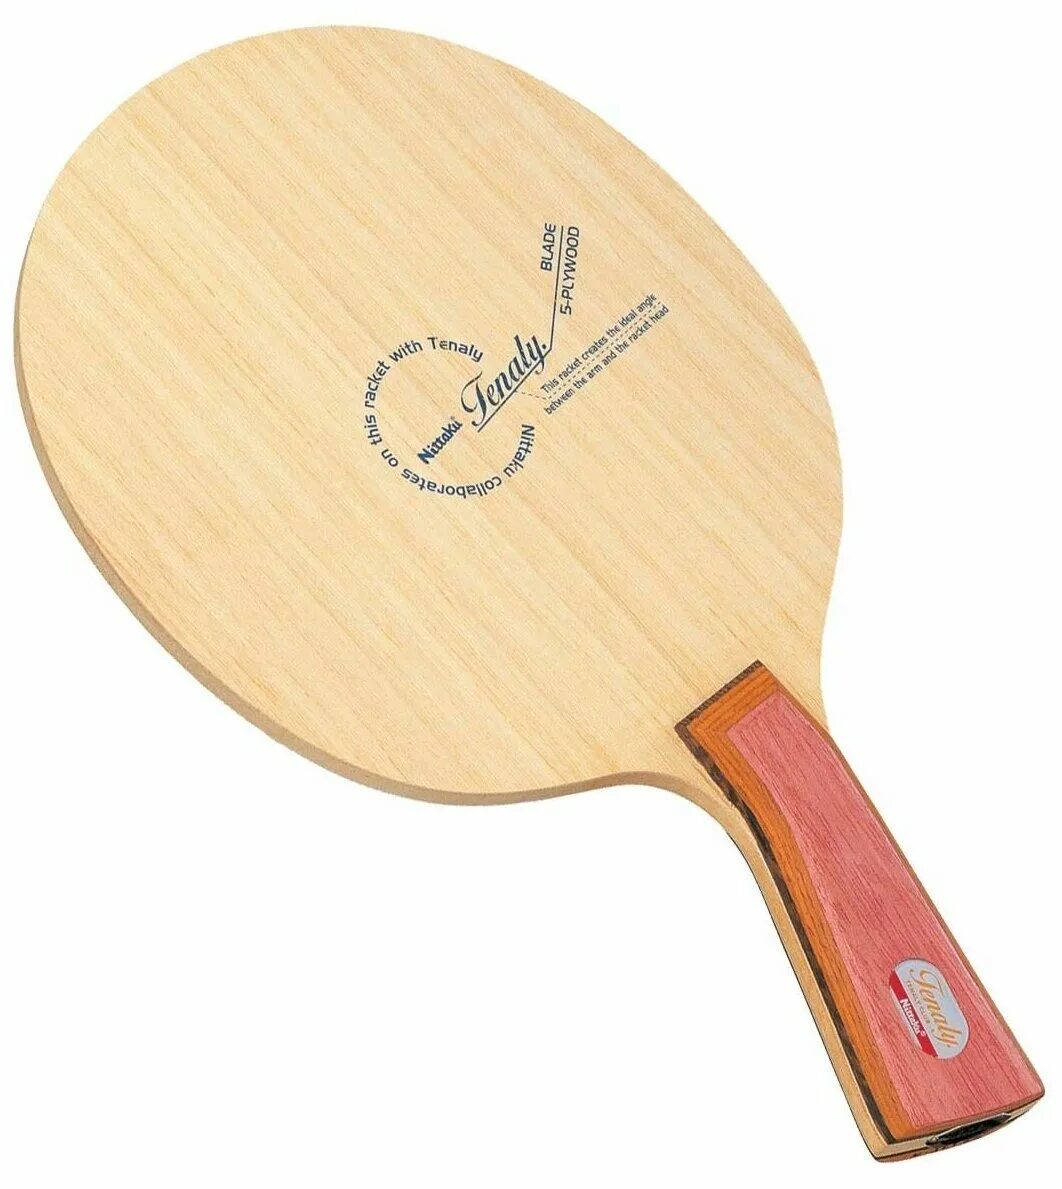 Ручка ракетки для настольного тенниса. Nittaku Tenaly. Основание ракетки для настольного тенниса DHS w1030. Основание ниттаку ракетка. Основания ниттаку настольный теннис.